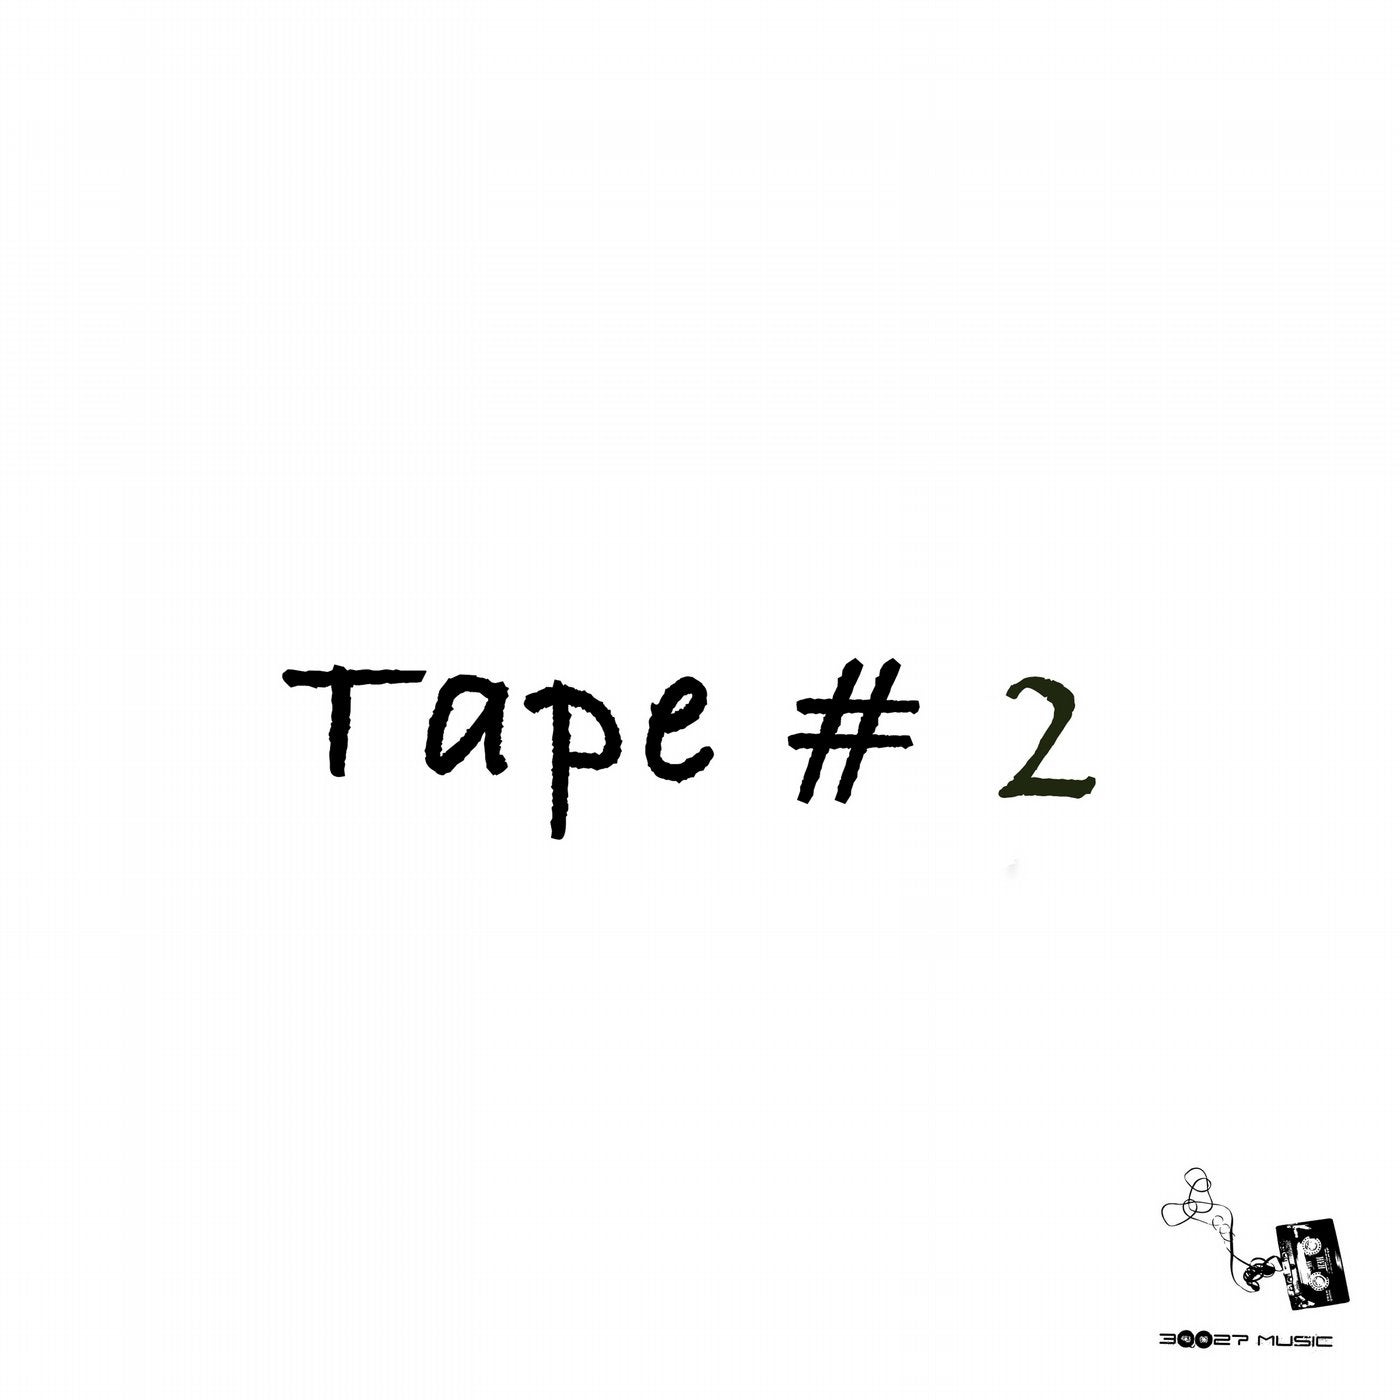 Tape #2